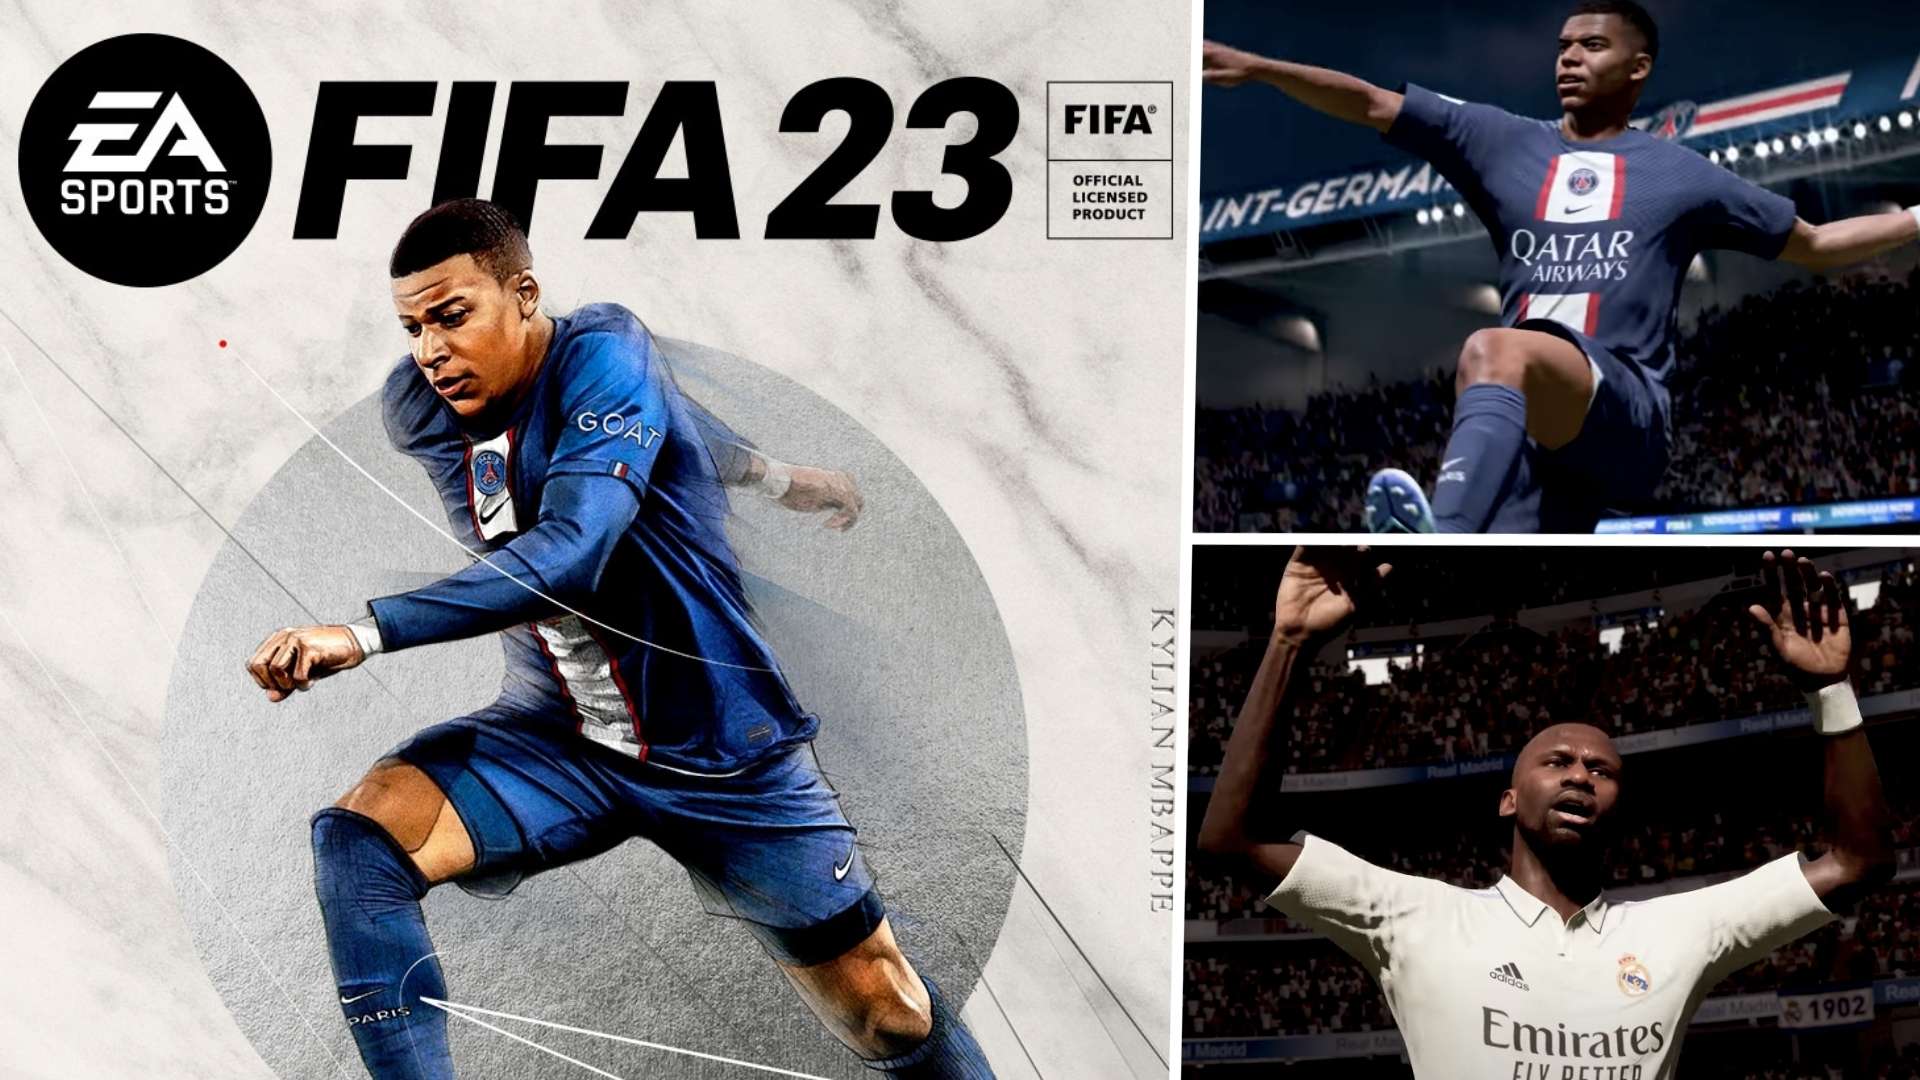 FIFA 23 trailer